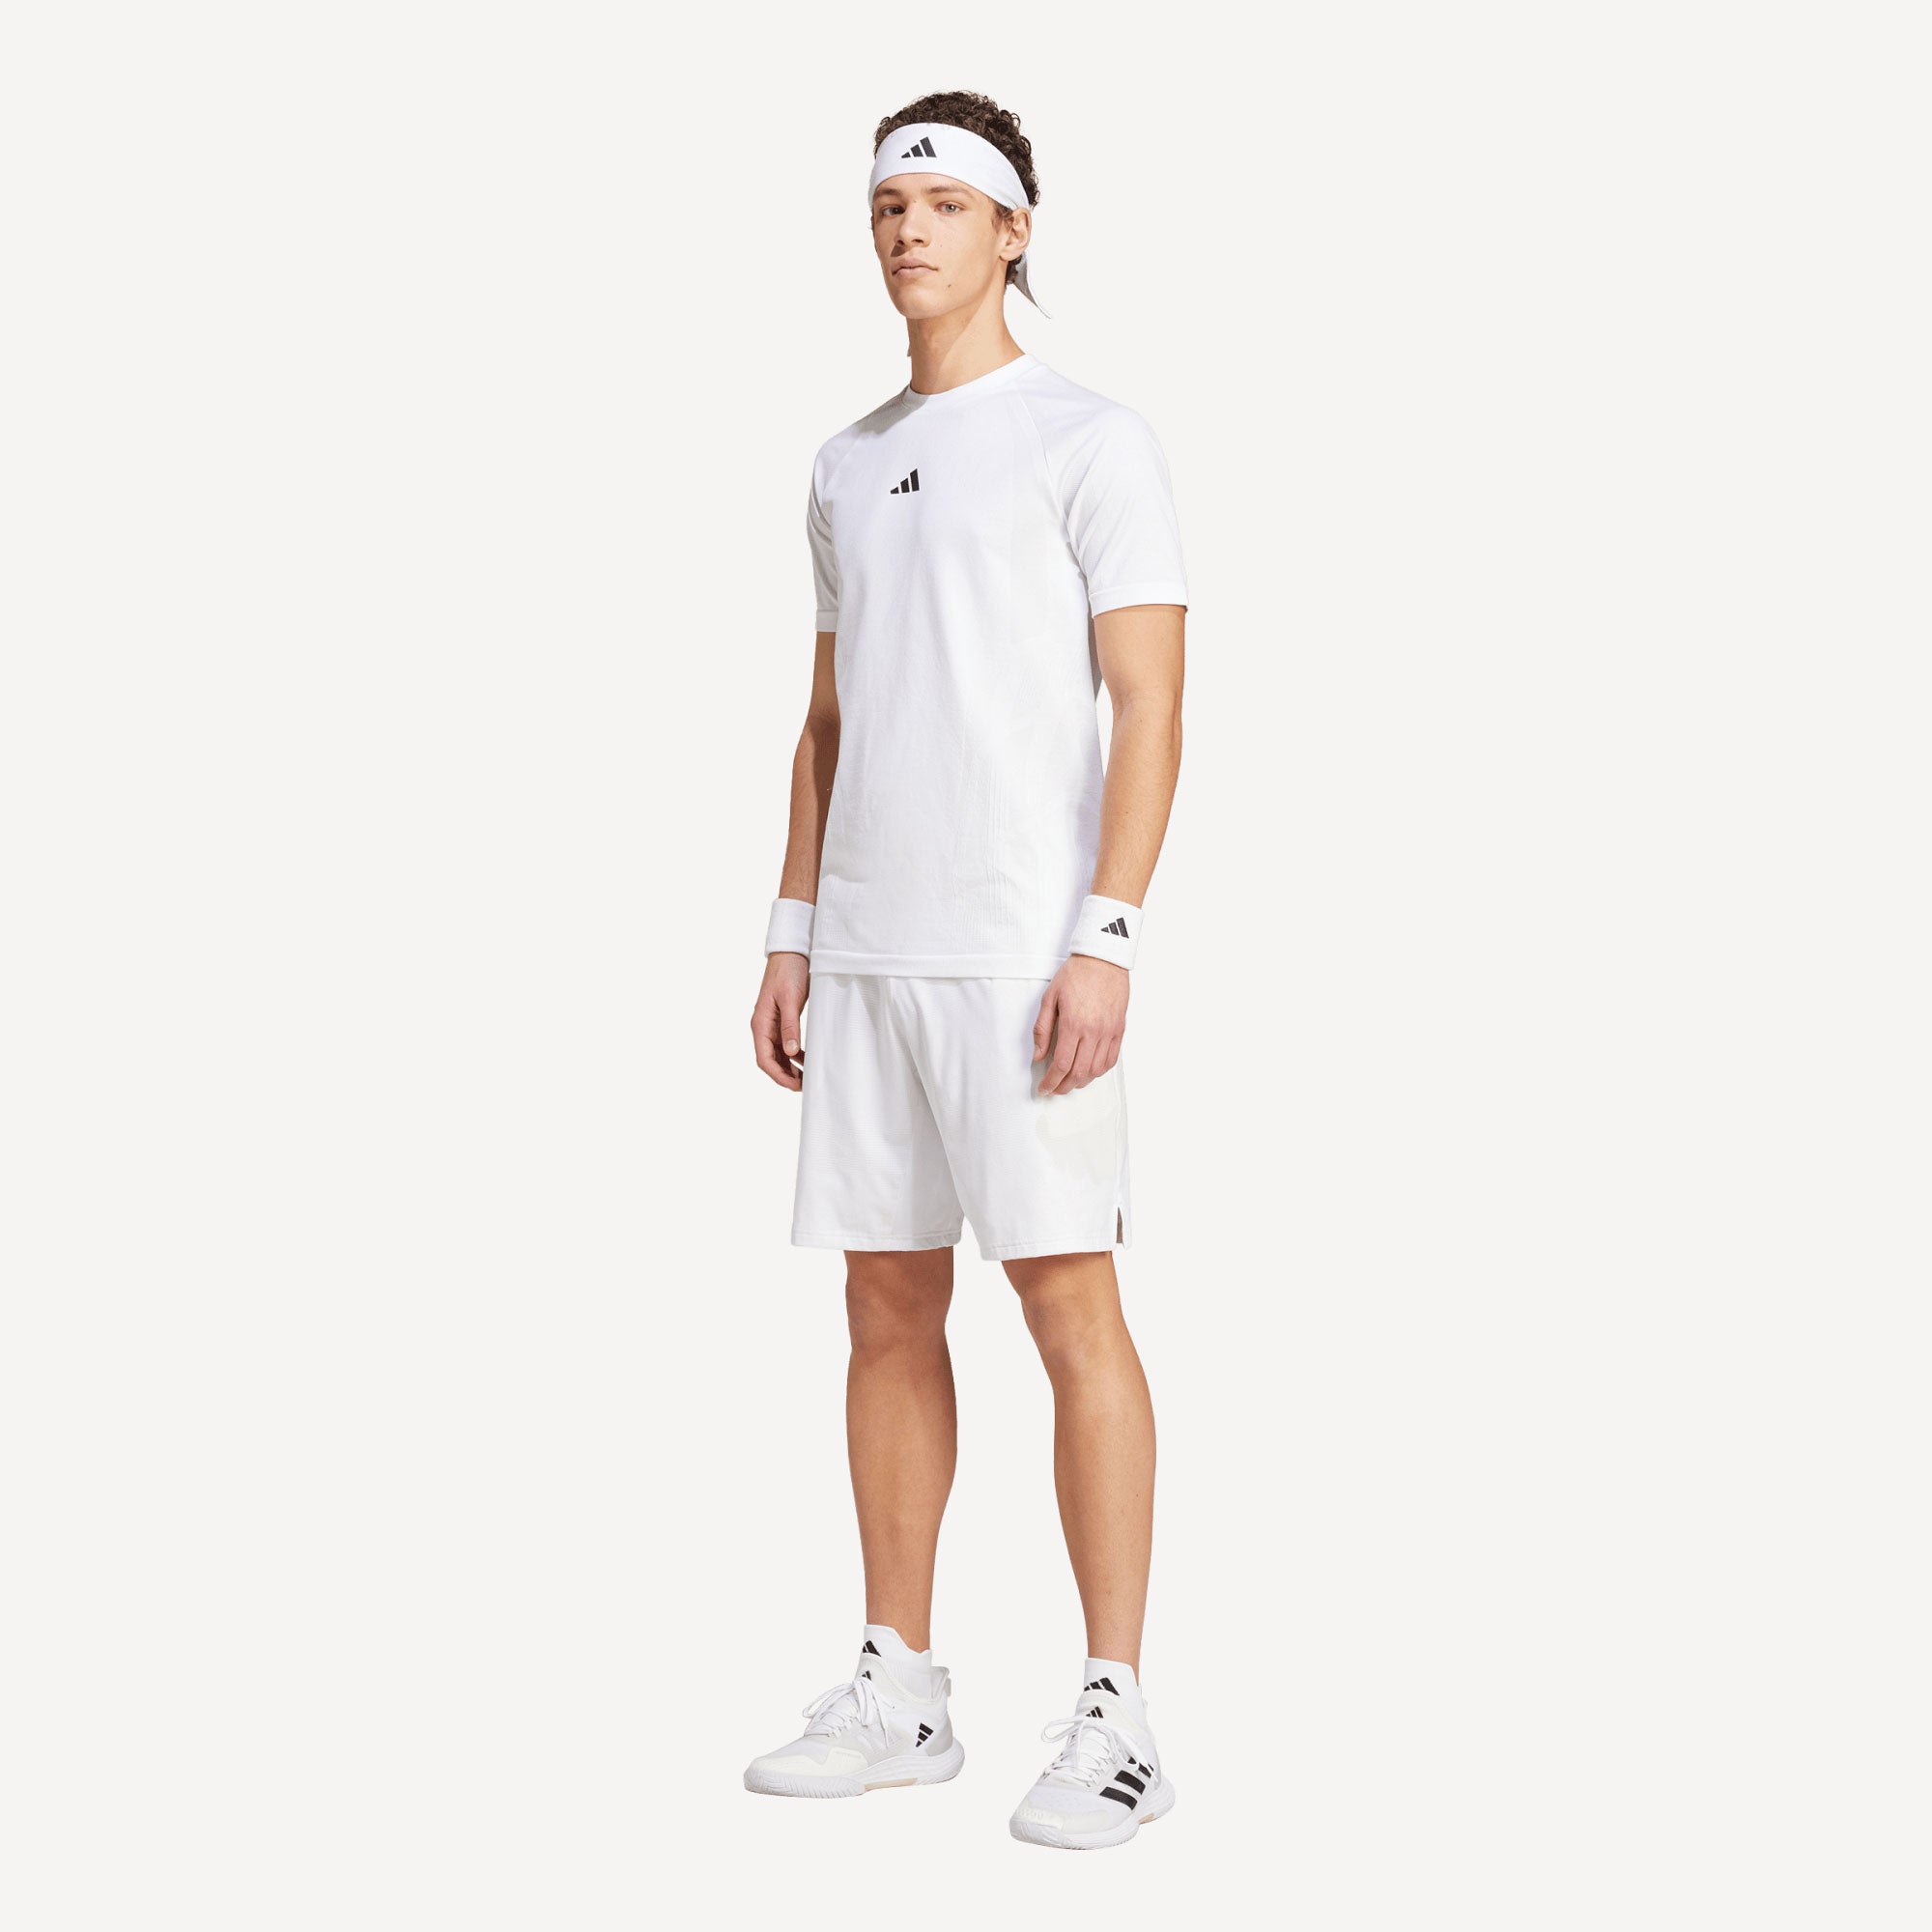 adidas Pro London Men's Seamless Tennis Shirt - White (4)